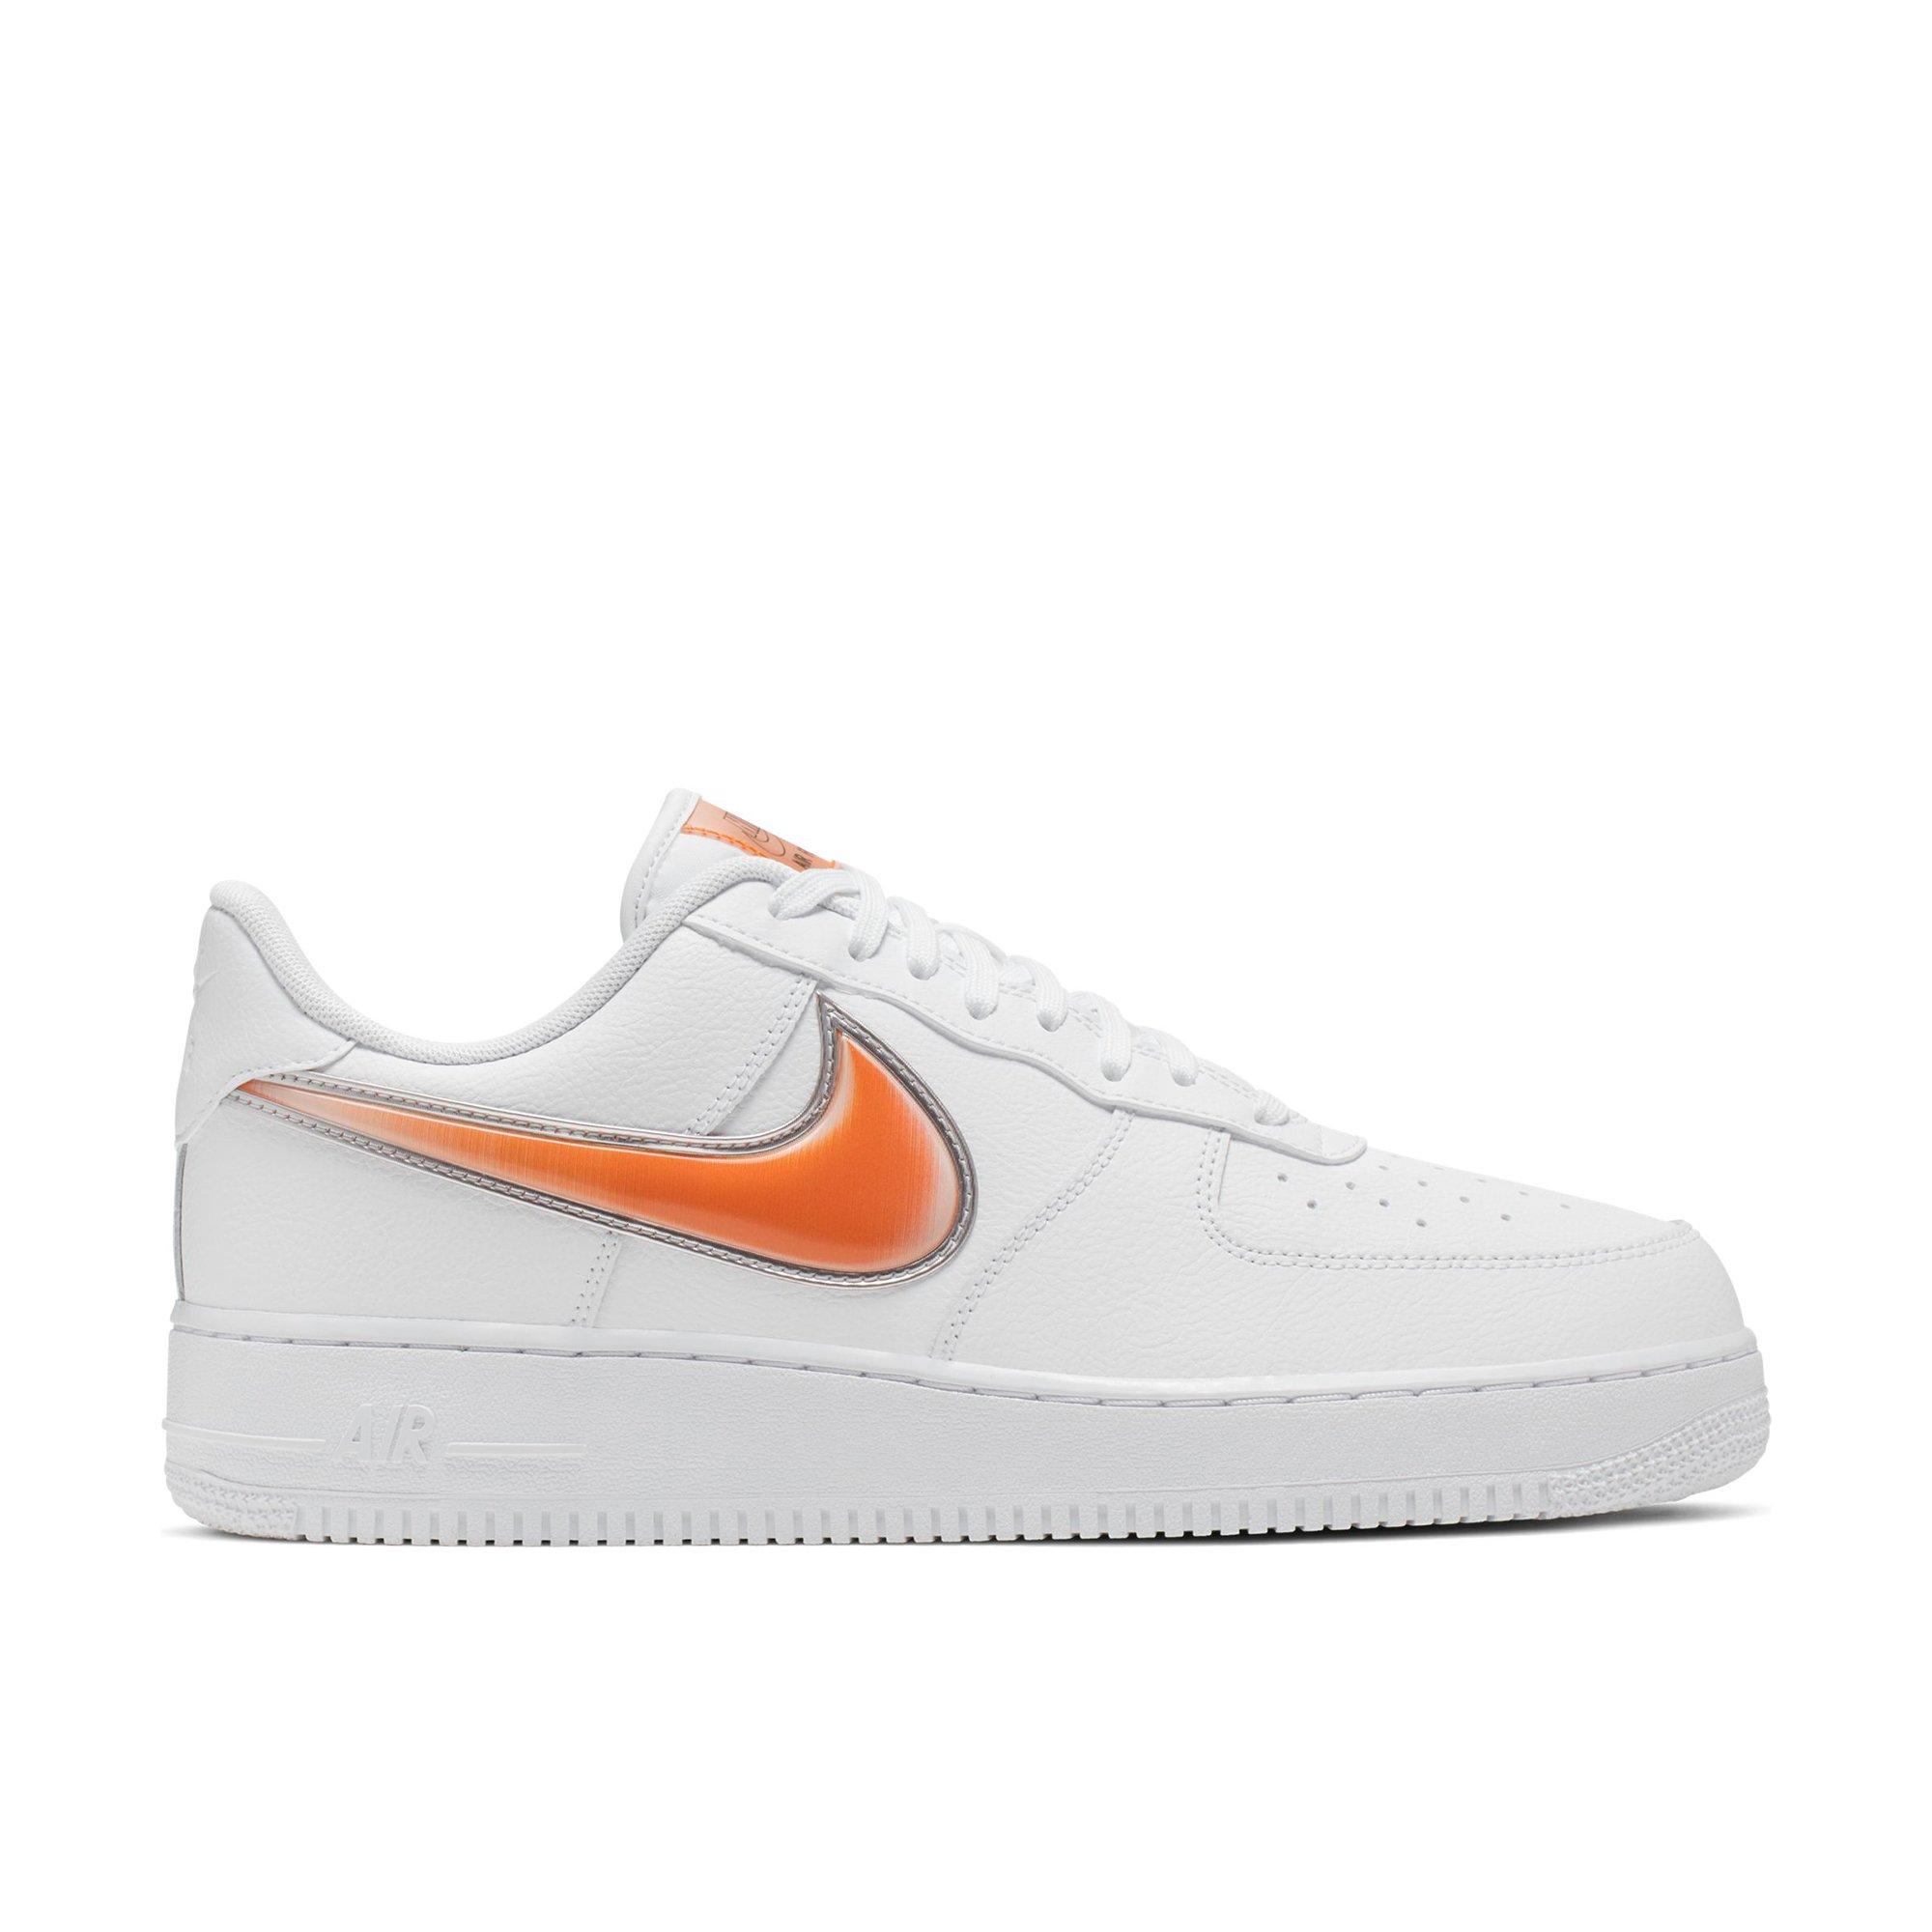 men's nike orange and white shoes